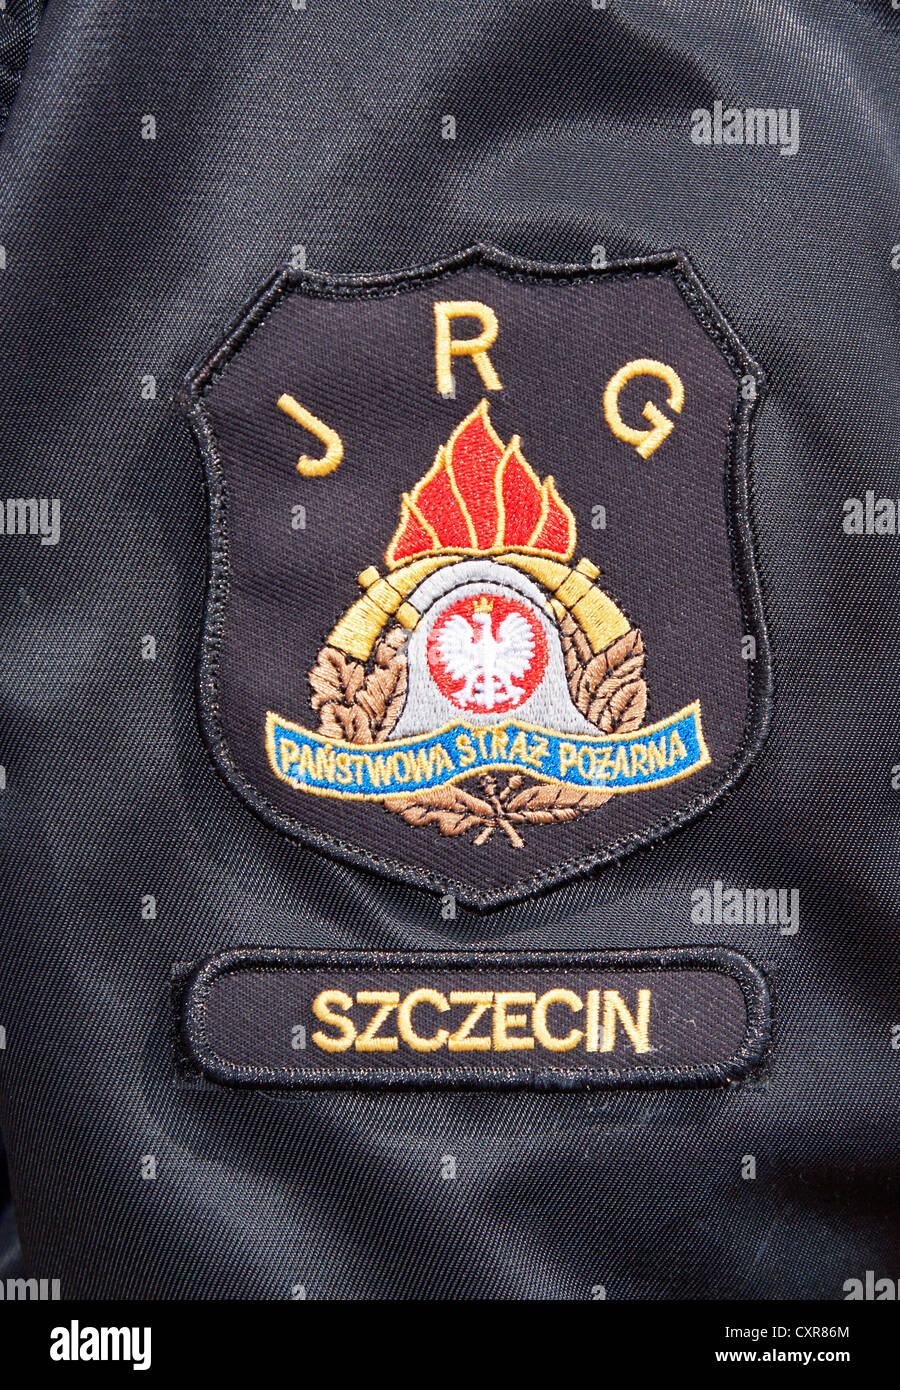 Professional fire department, Szczecin, logo, emblem, JRG, Szczecin, Poland, Europe Stock Photo